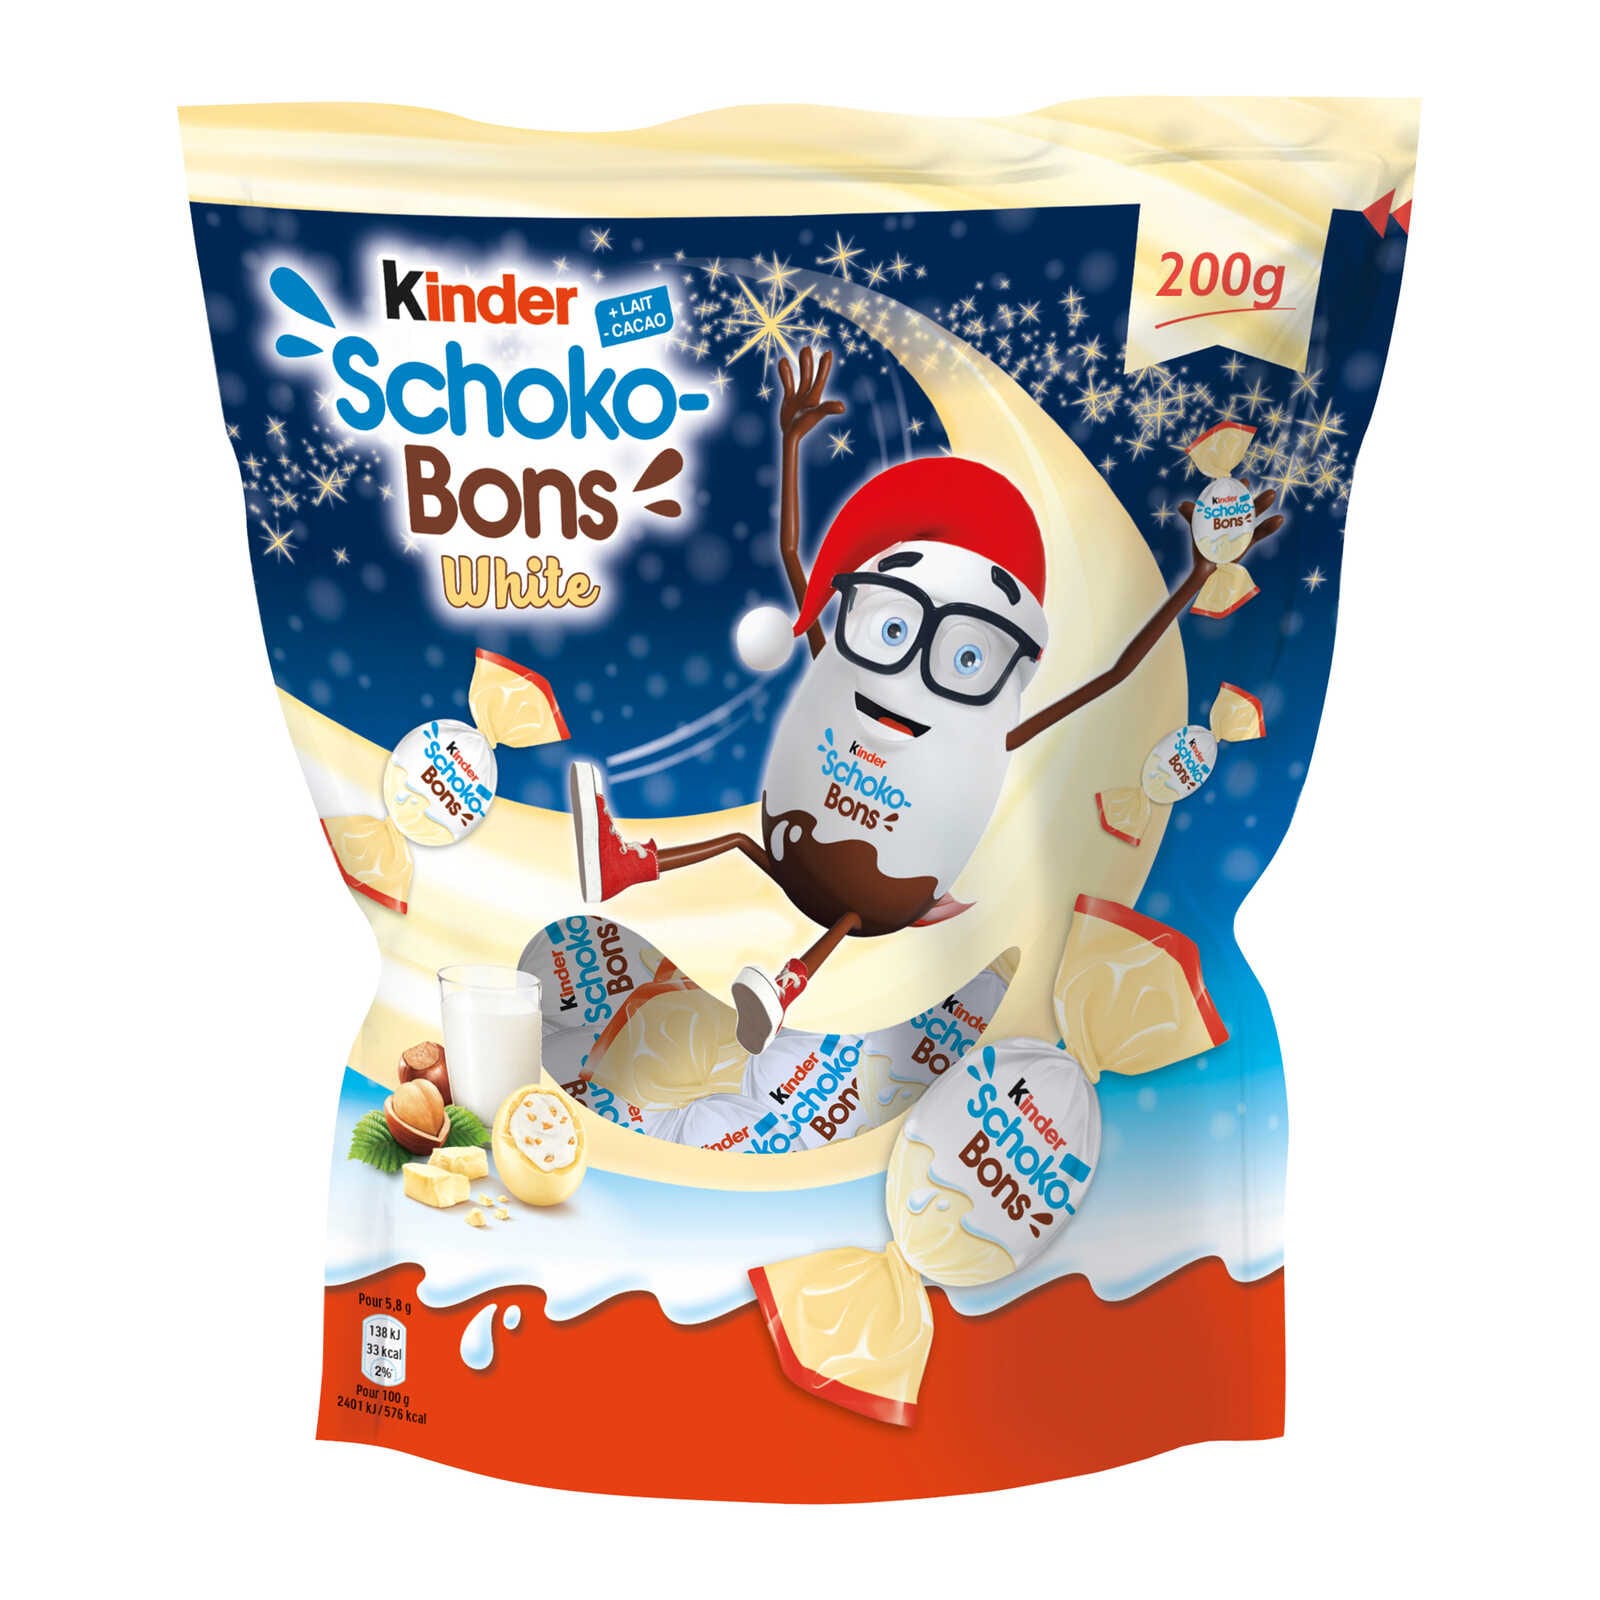 Kinder, Schoko-Bons White, Chocolat blanc, Bonbon